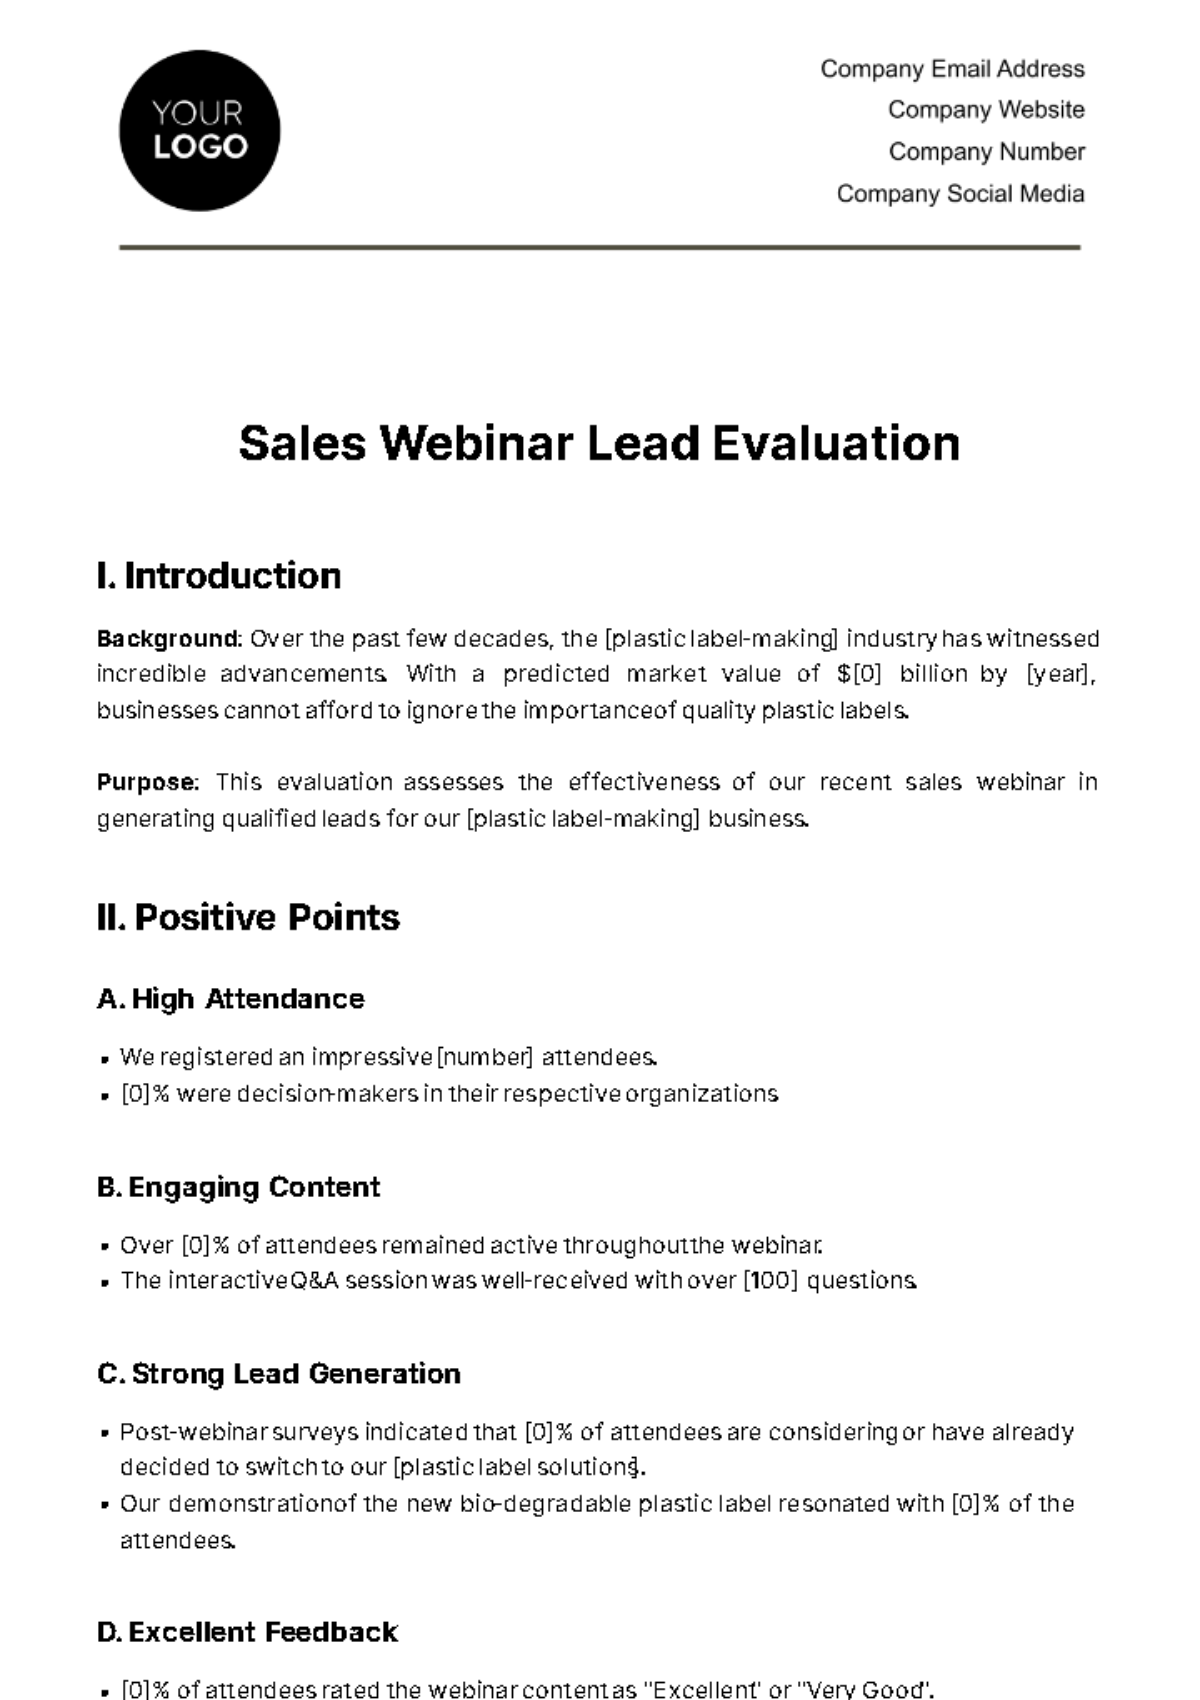 Free Sales Webinar Lead Evaluation Template